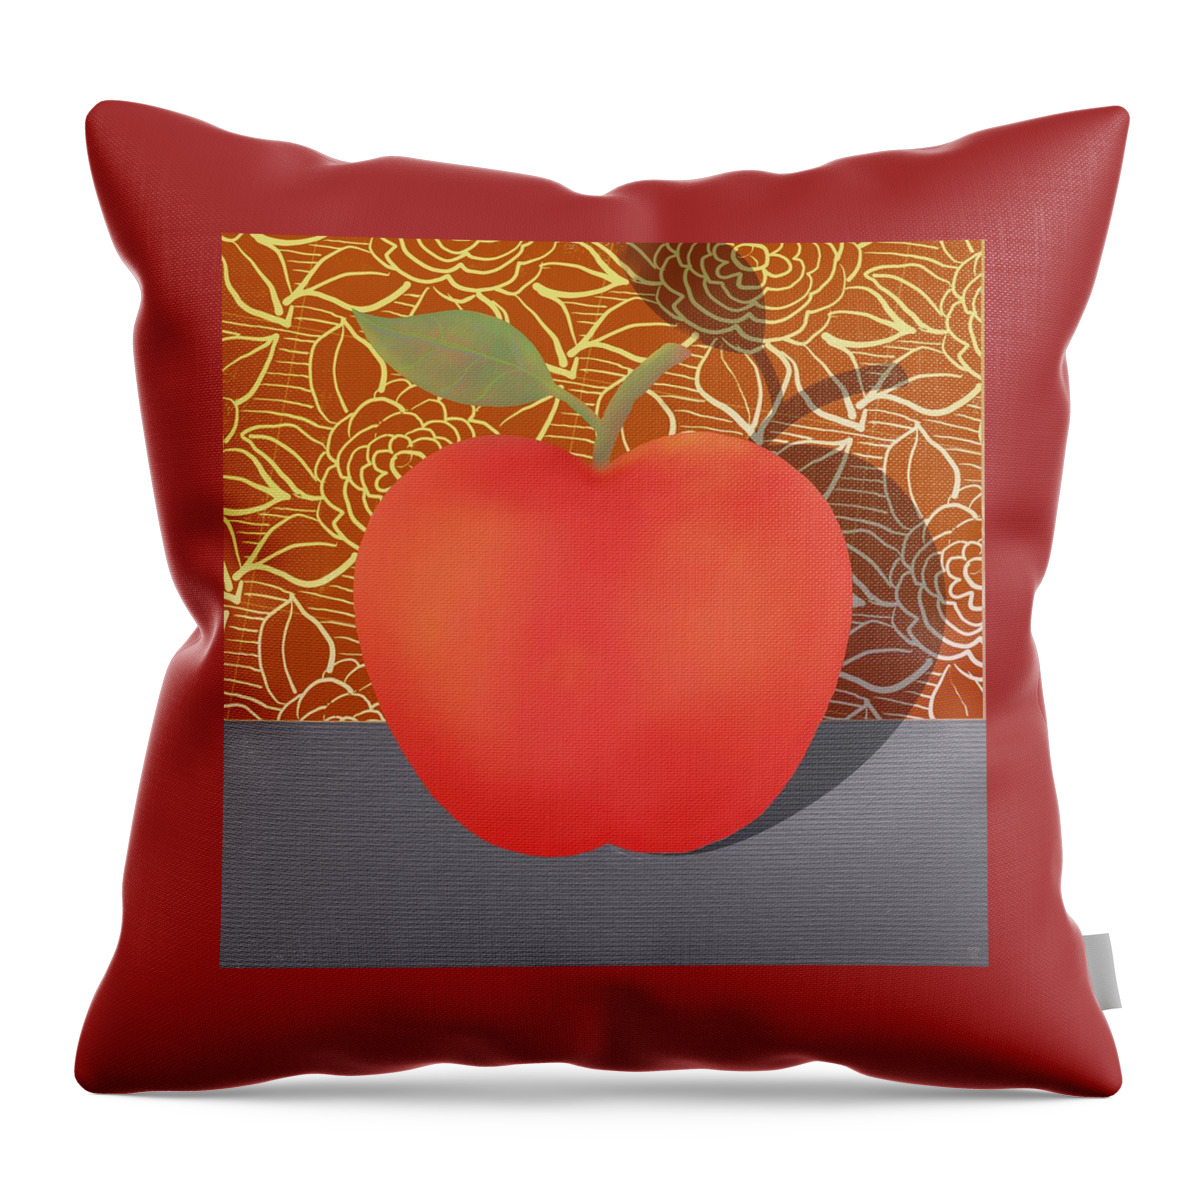 Apple Throw Pillow featuring the digital art Apple by Steve Hayhurst